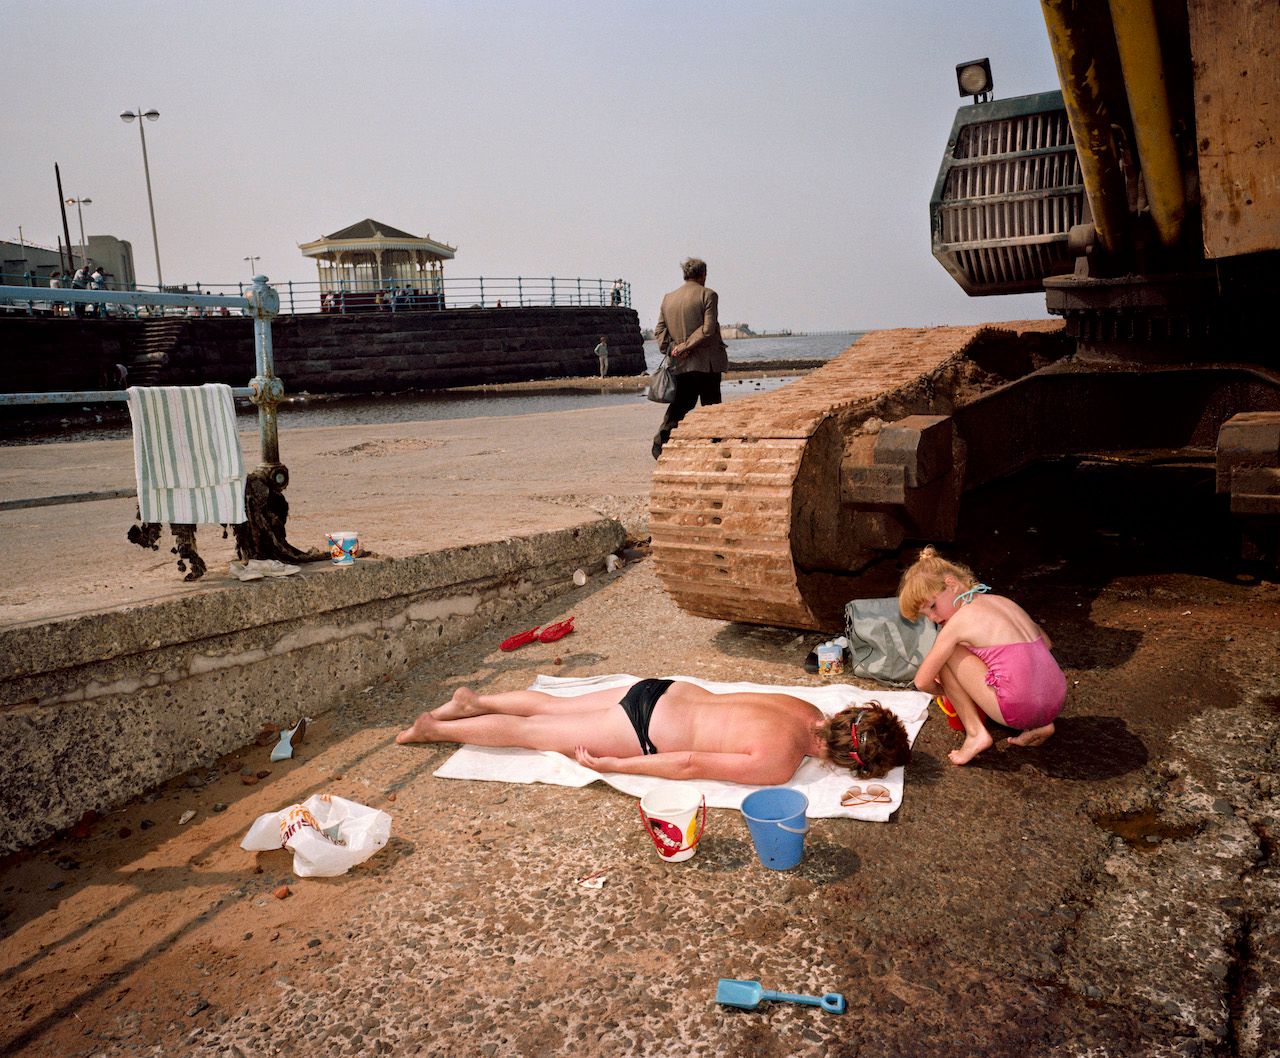 GB.-England.-New-Brighton.-From-The-Last-Resort.-1983-85.-©-Martin-Parr-Magnum-Photos.jpg